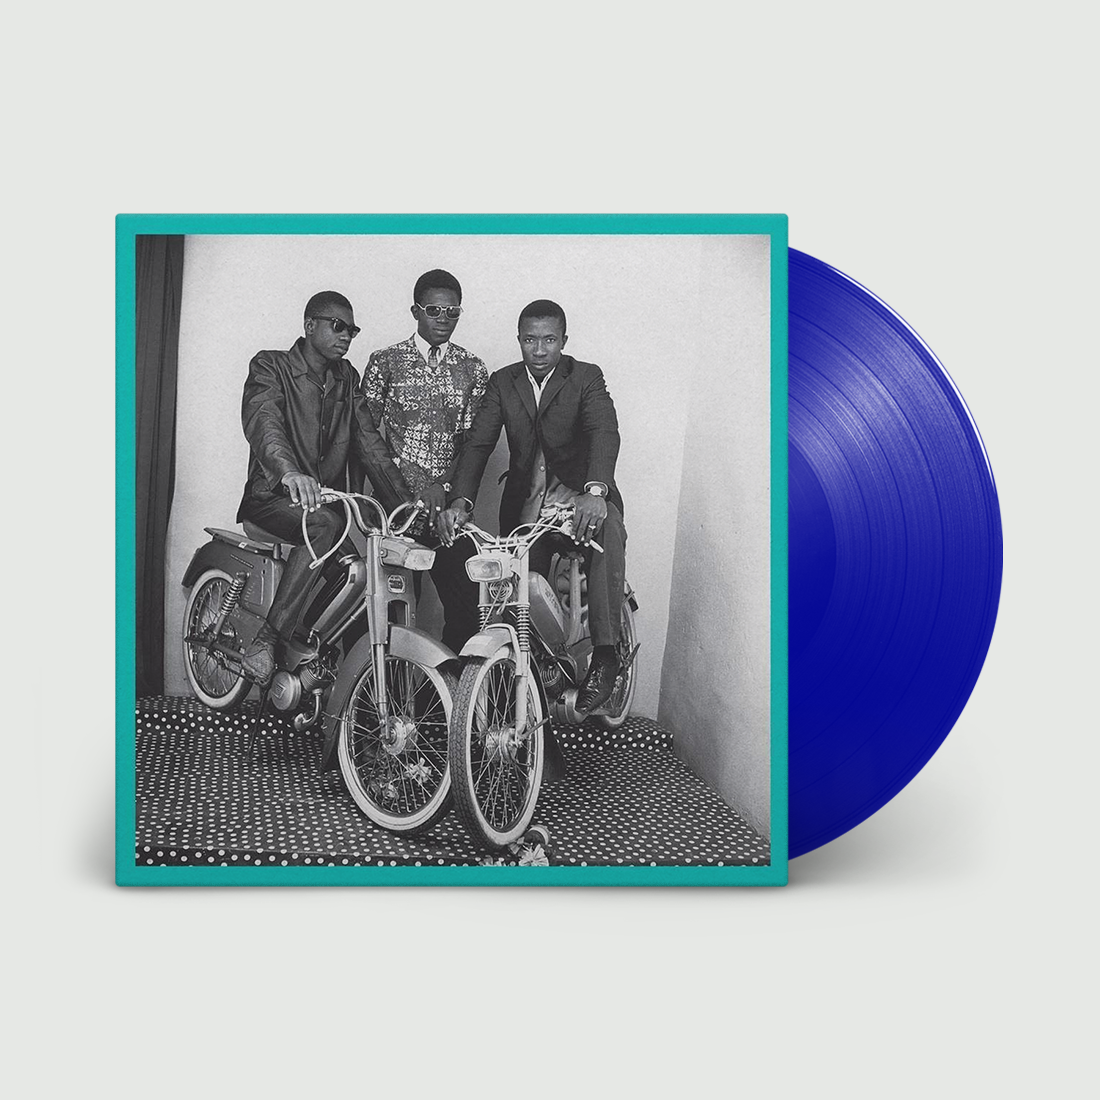 The Original Sound of Mali: Limited Edition Blue Vinyl LP